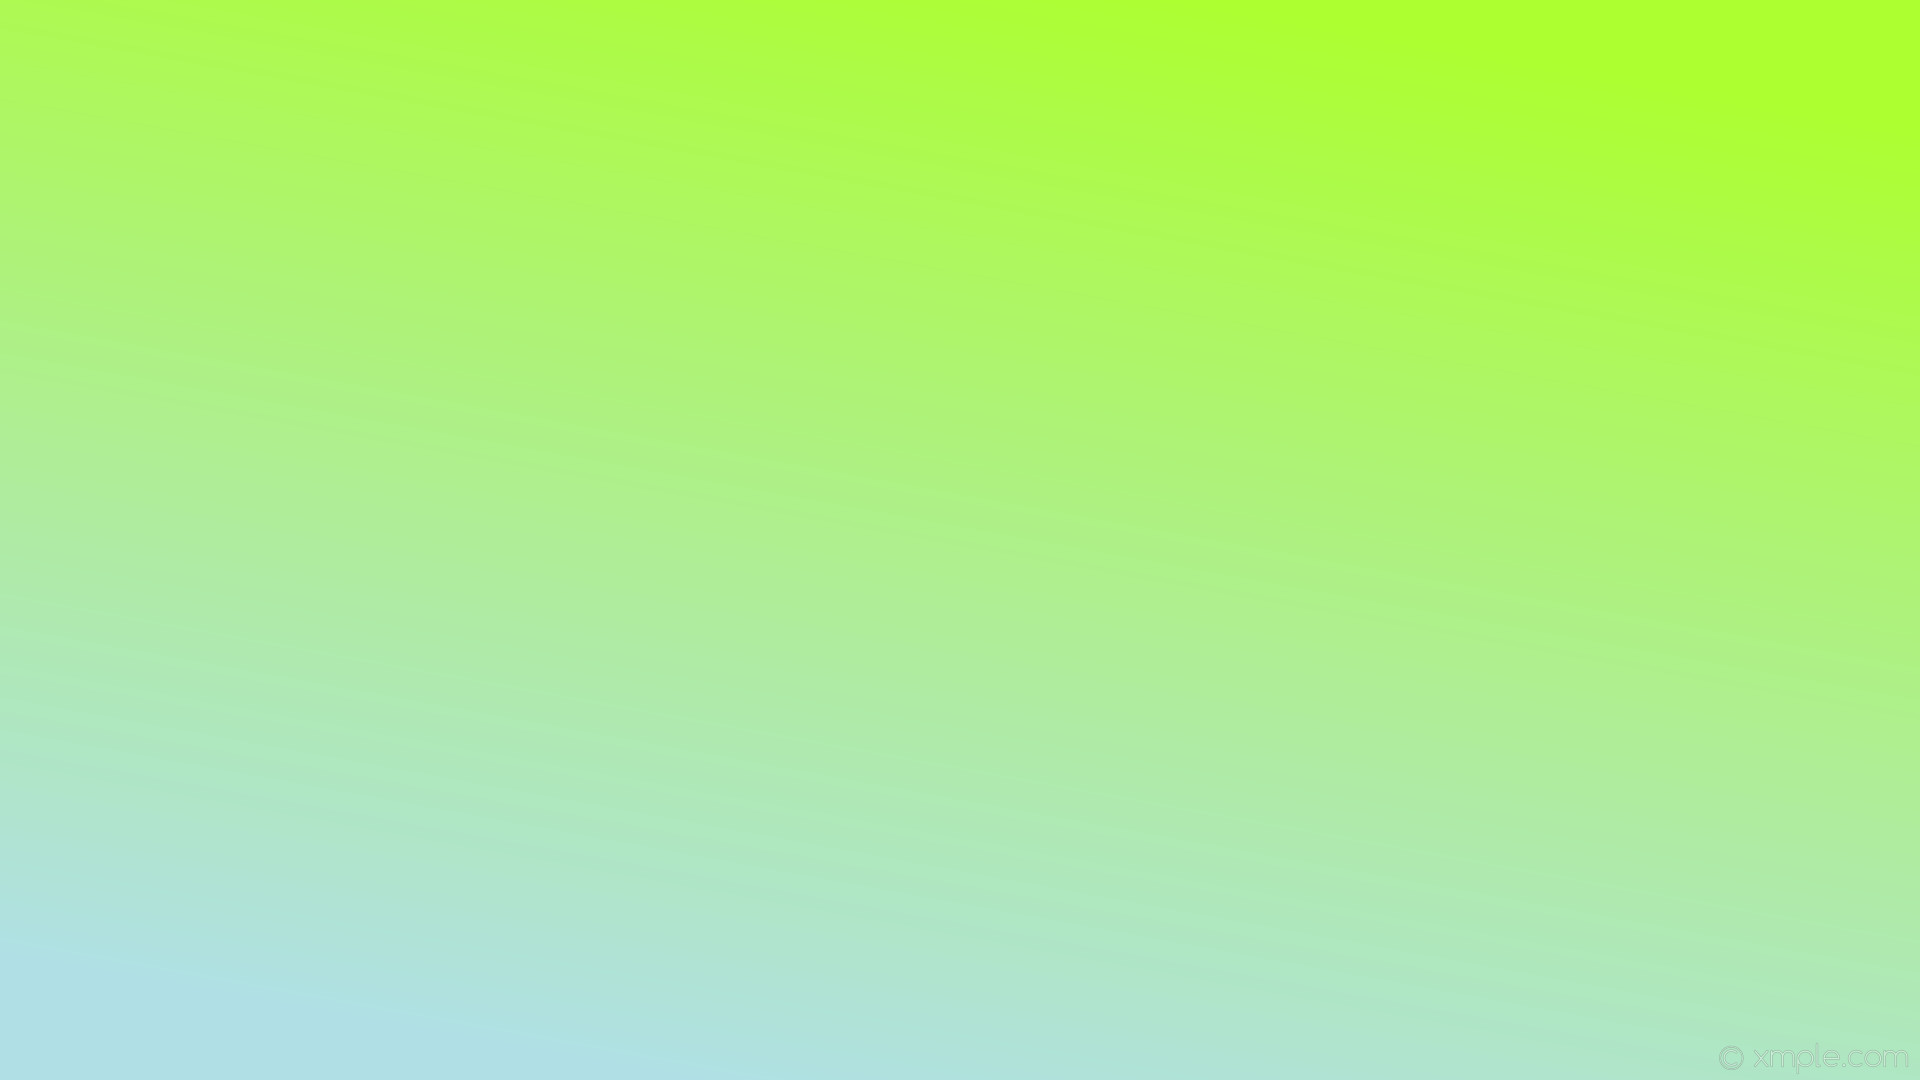 1920x1080 wallpaper green linear blue gradient powder blue green yellow #b0e0e6  #adff2f 240Â°